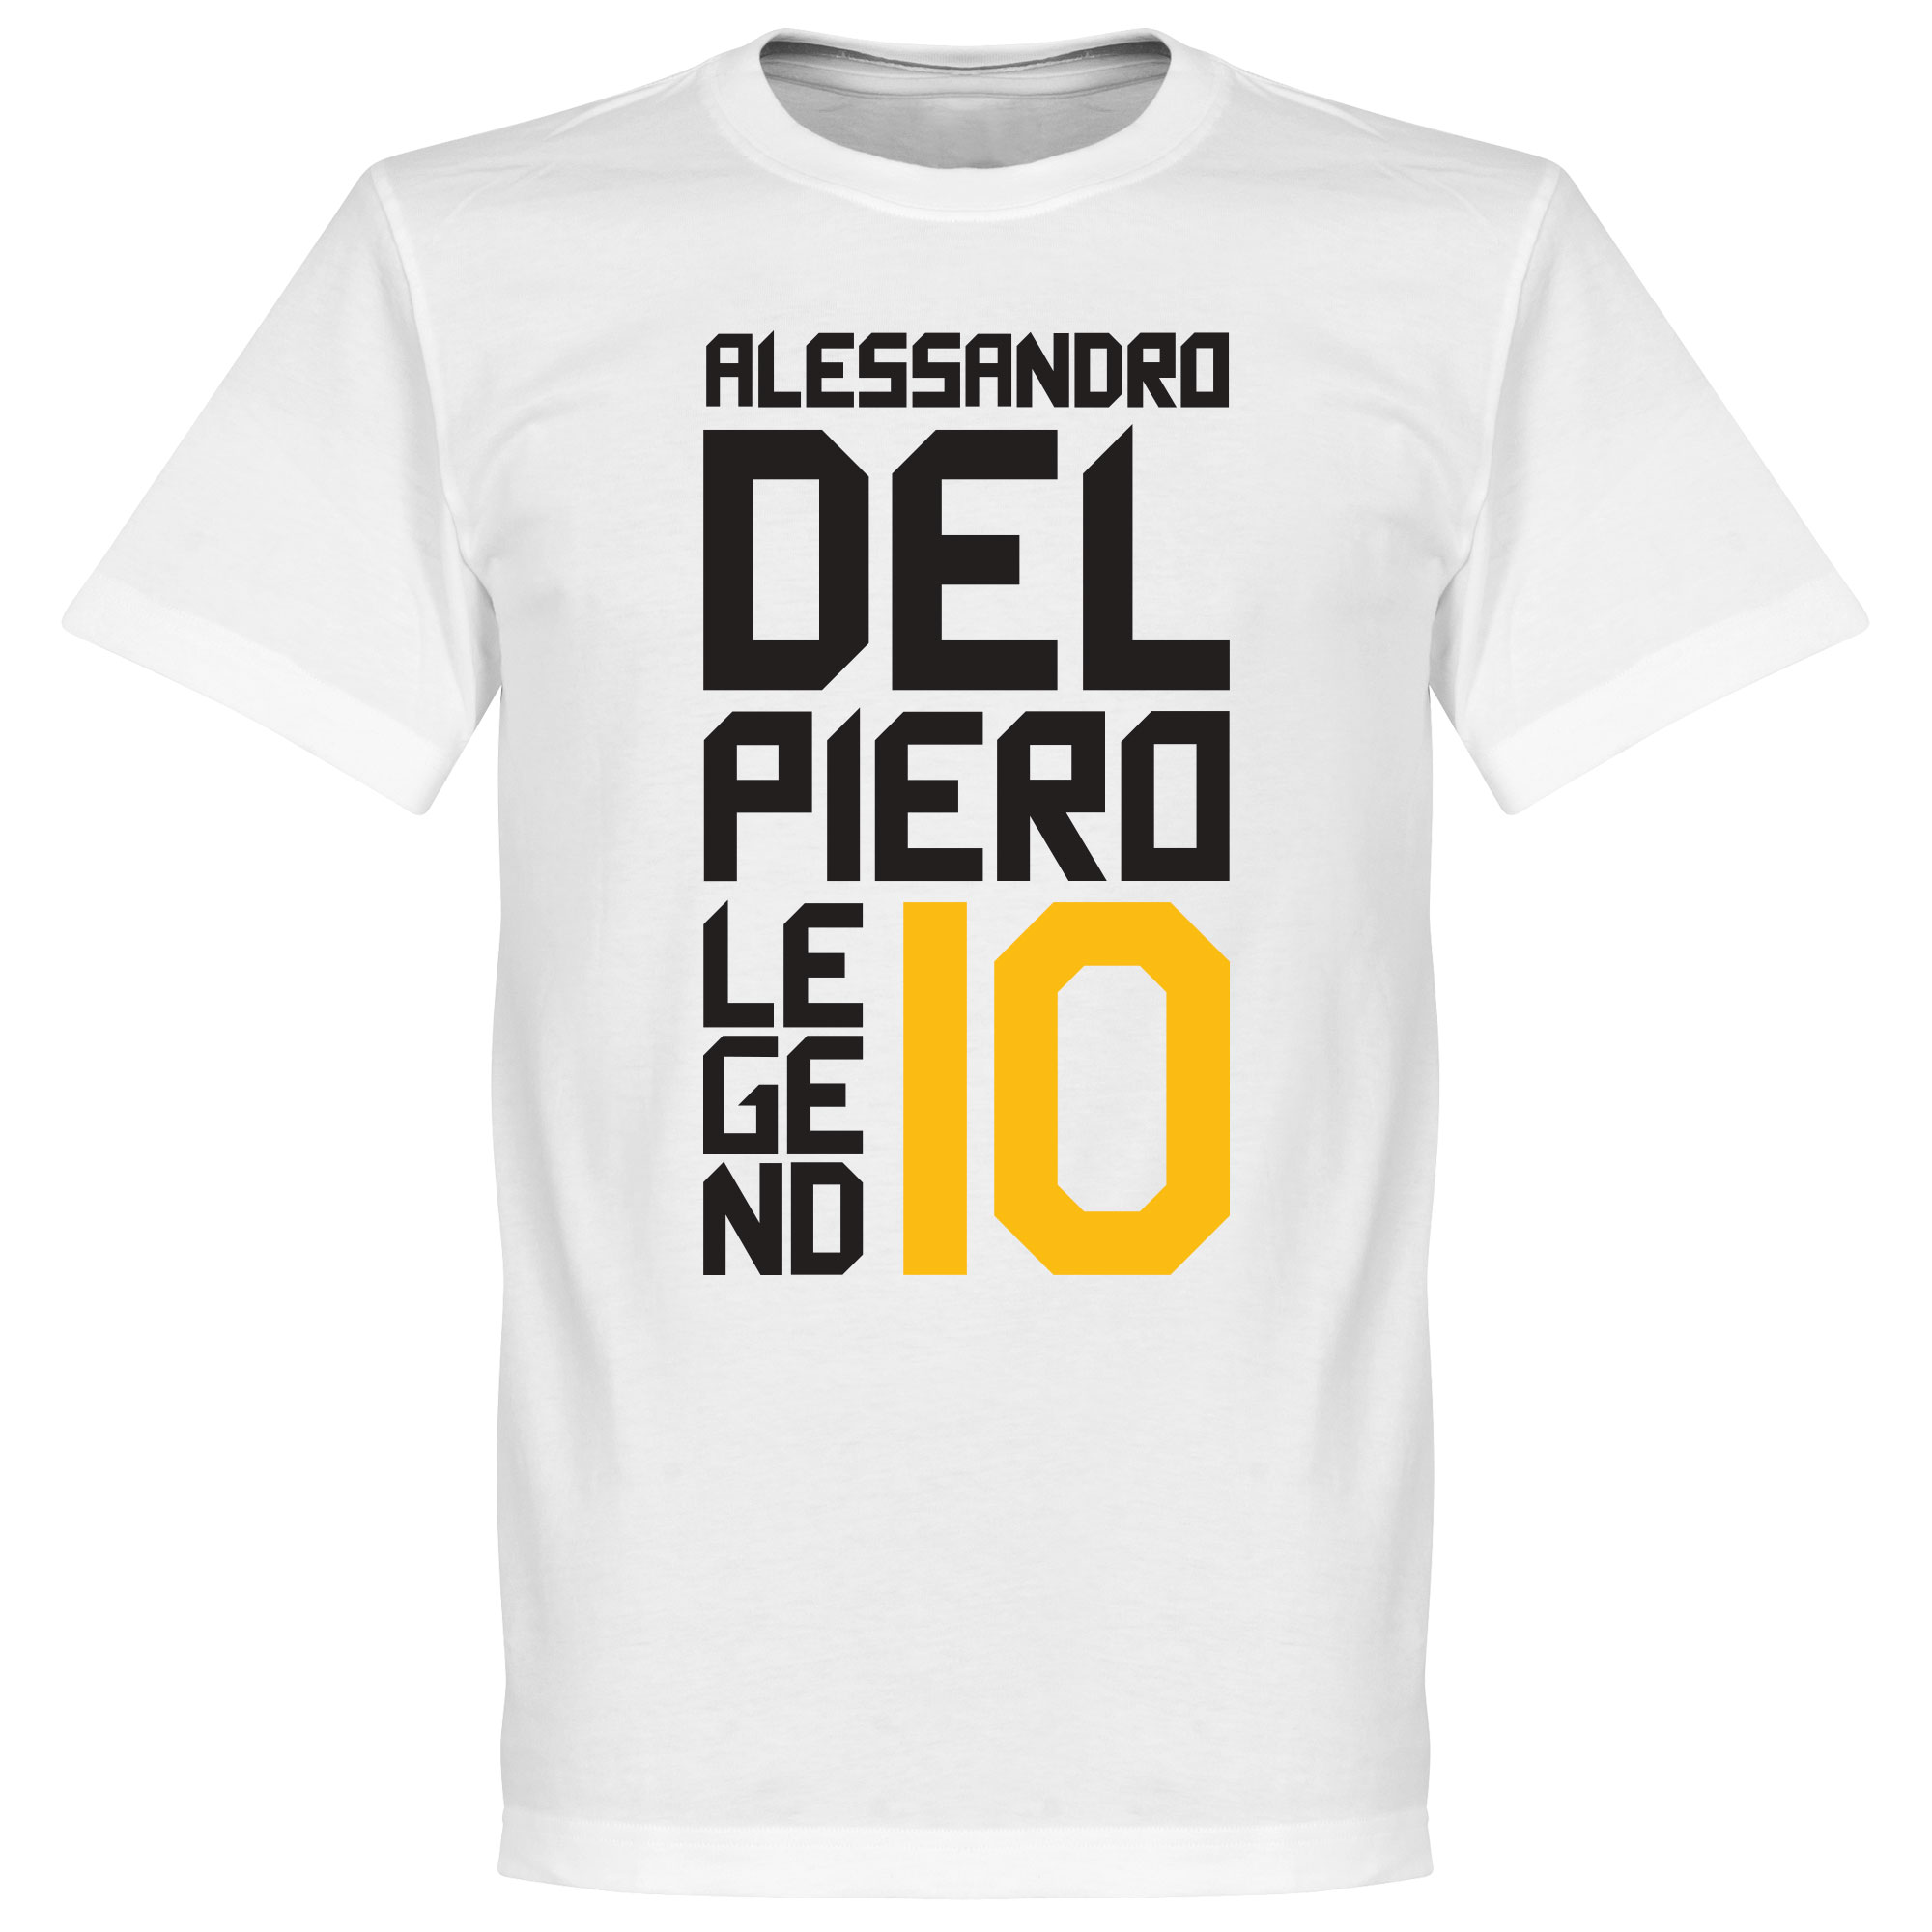 Del Piero Legend T-Shirt S